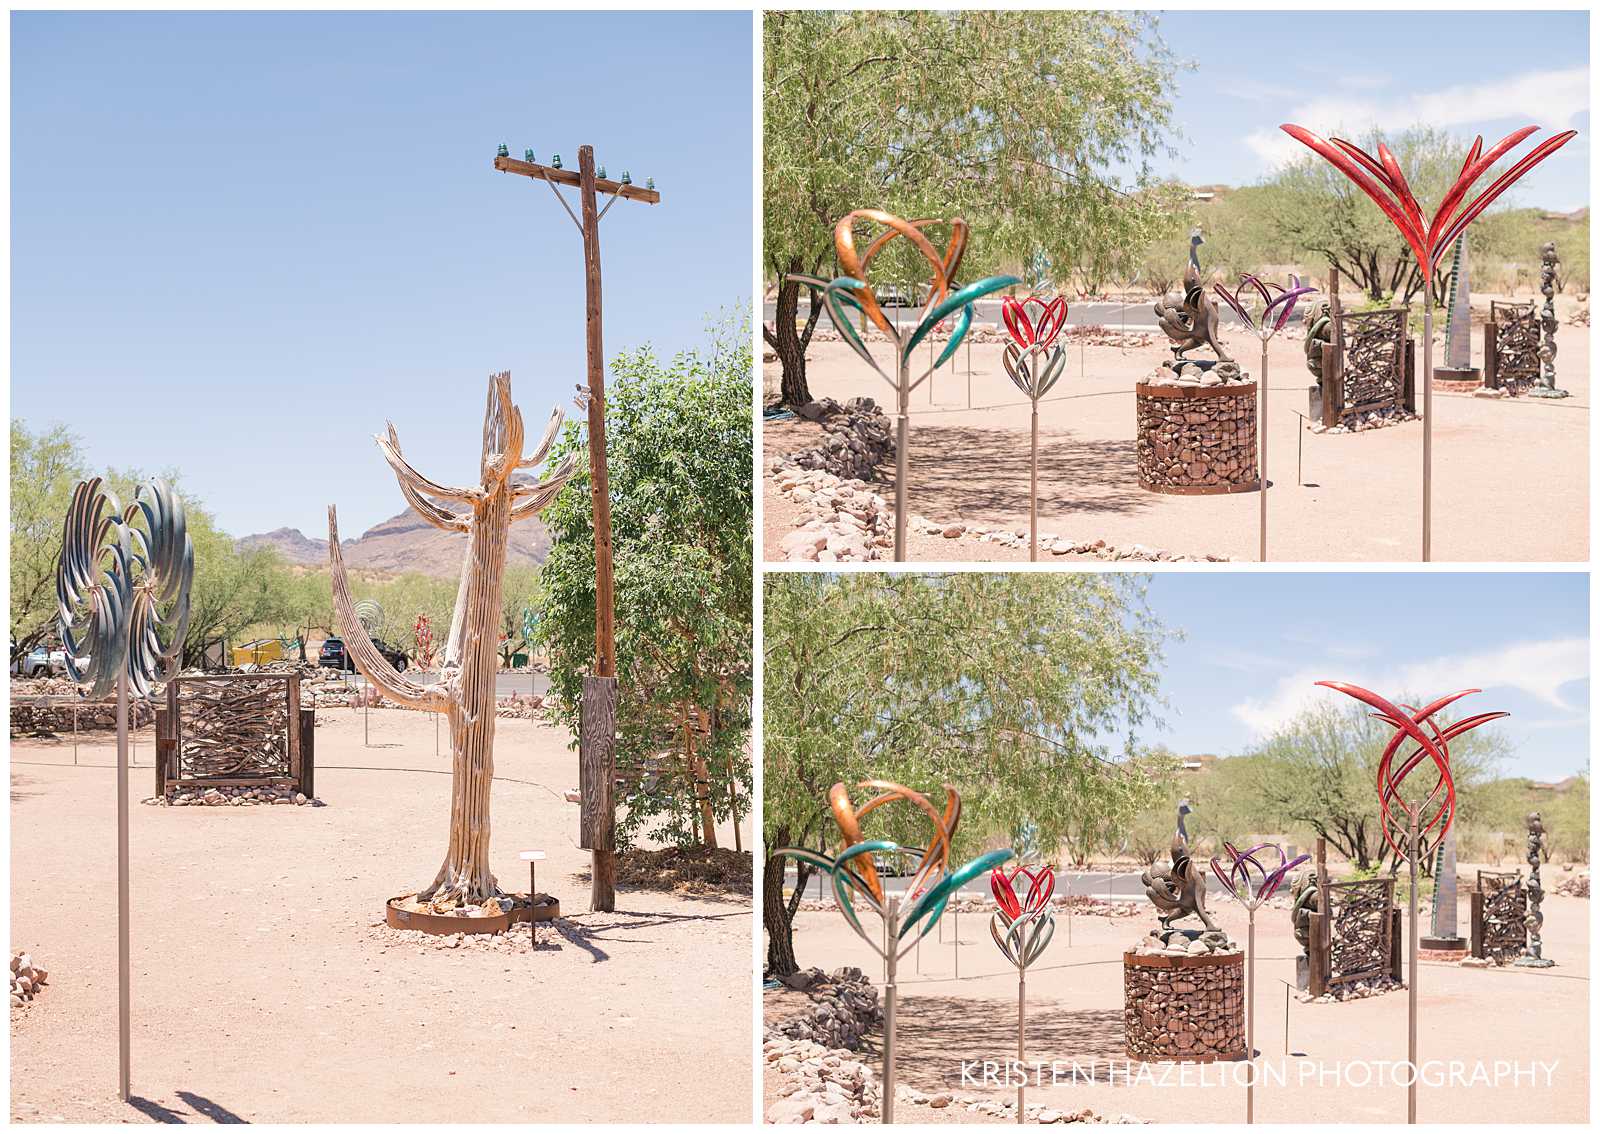 Kinetic yard sculptures in Tubac, AZ